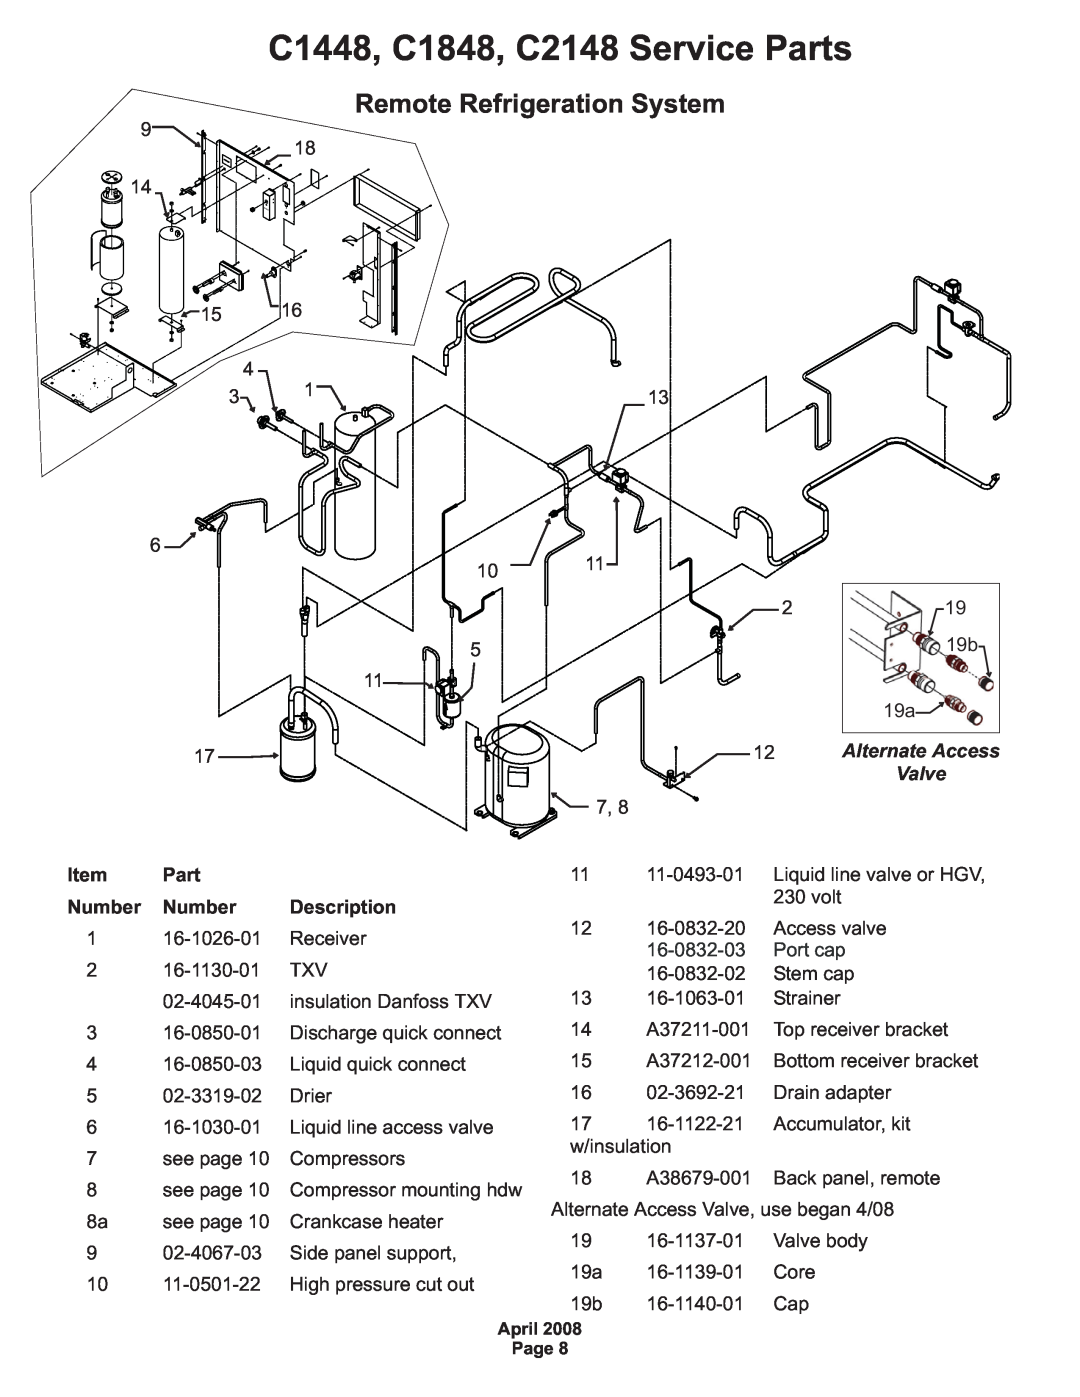 Scotsman Ice manual Remote Refrigeration System, C1448, C1848, C2148 Service Parts, Alternate Access Valve, Item Part 